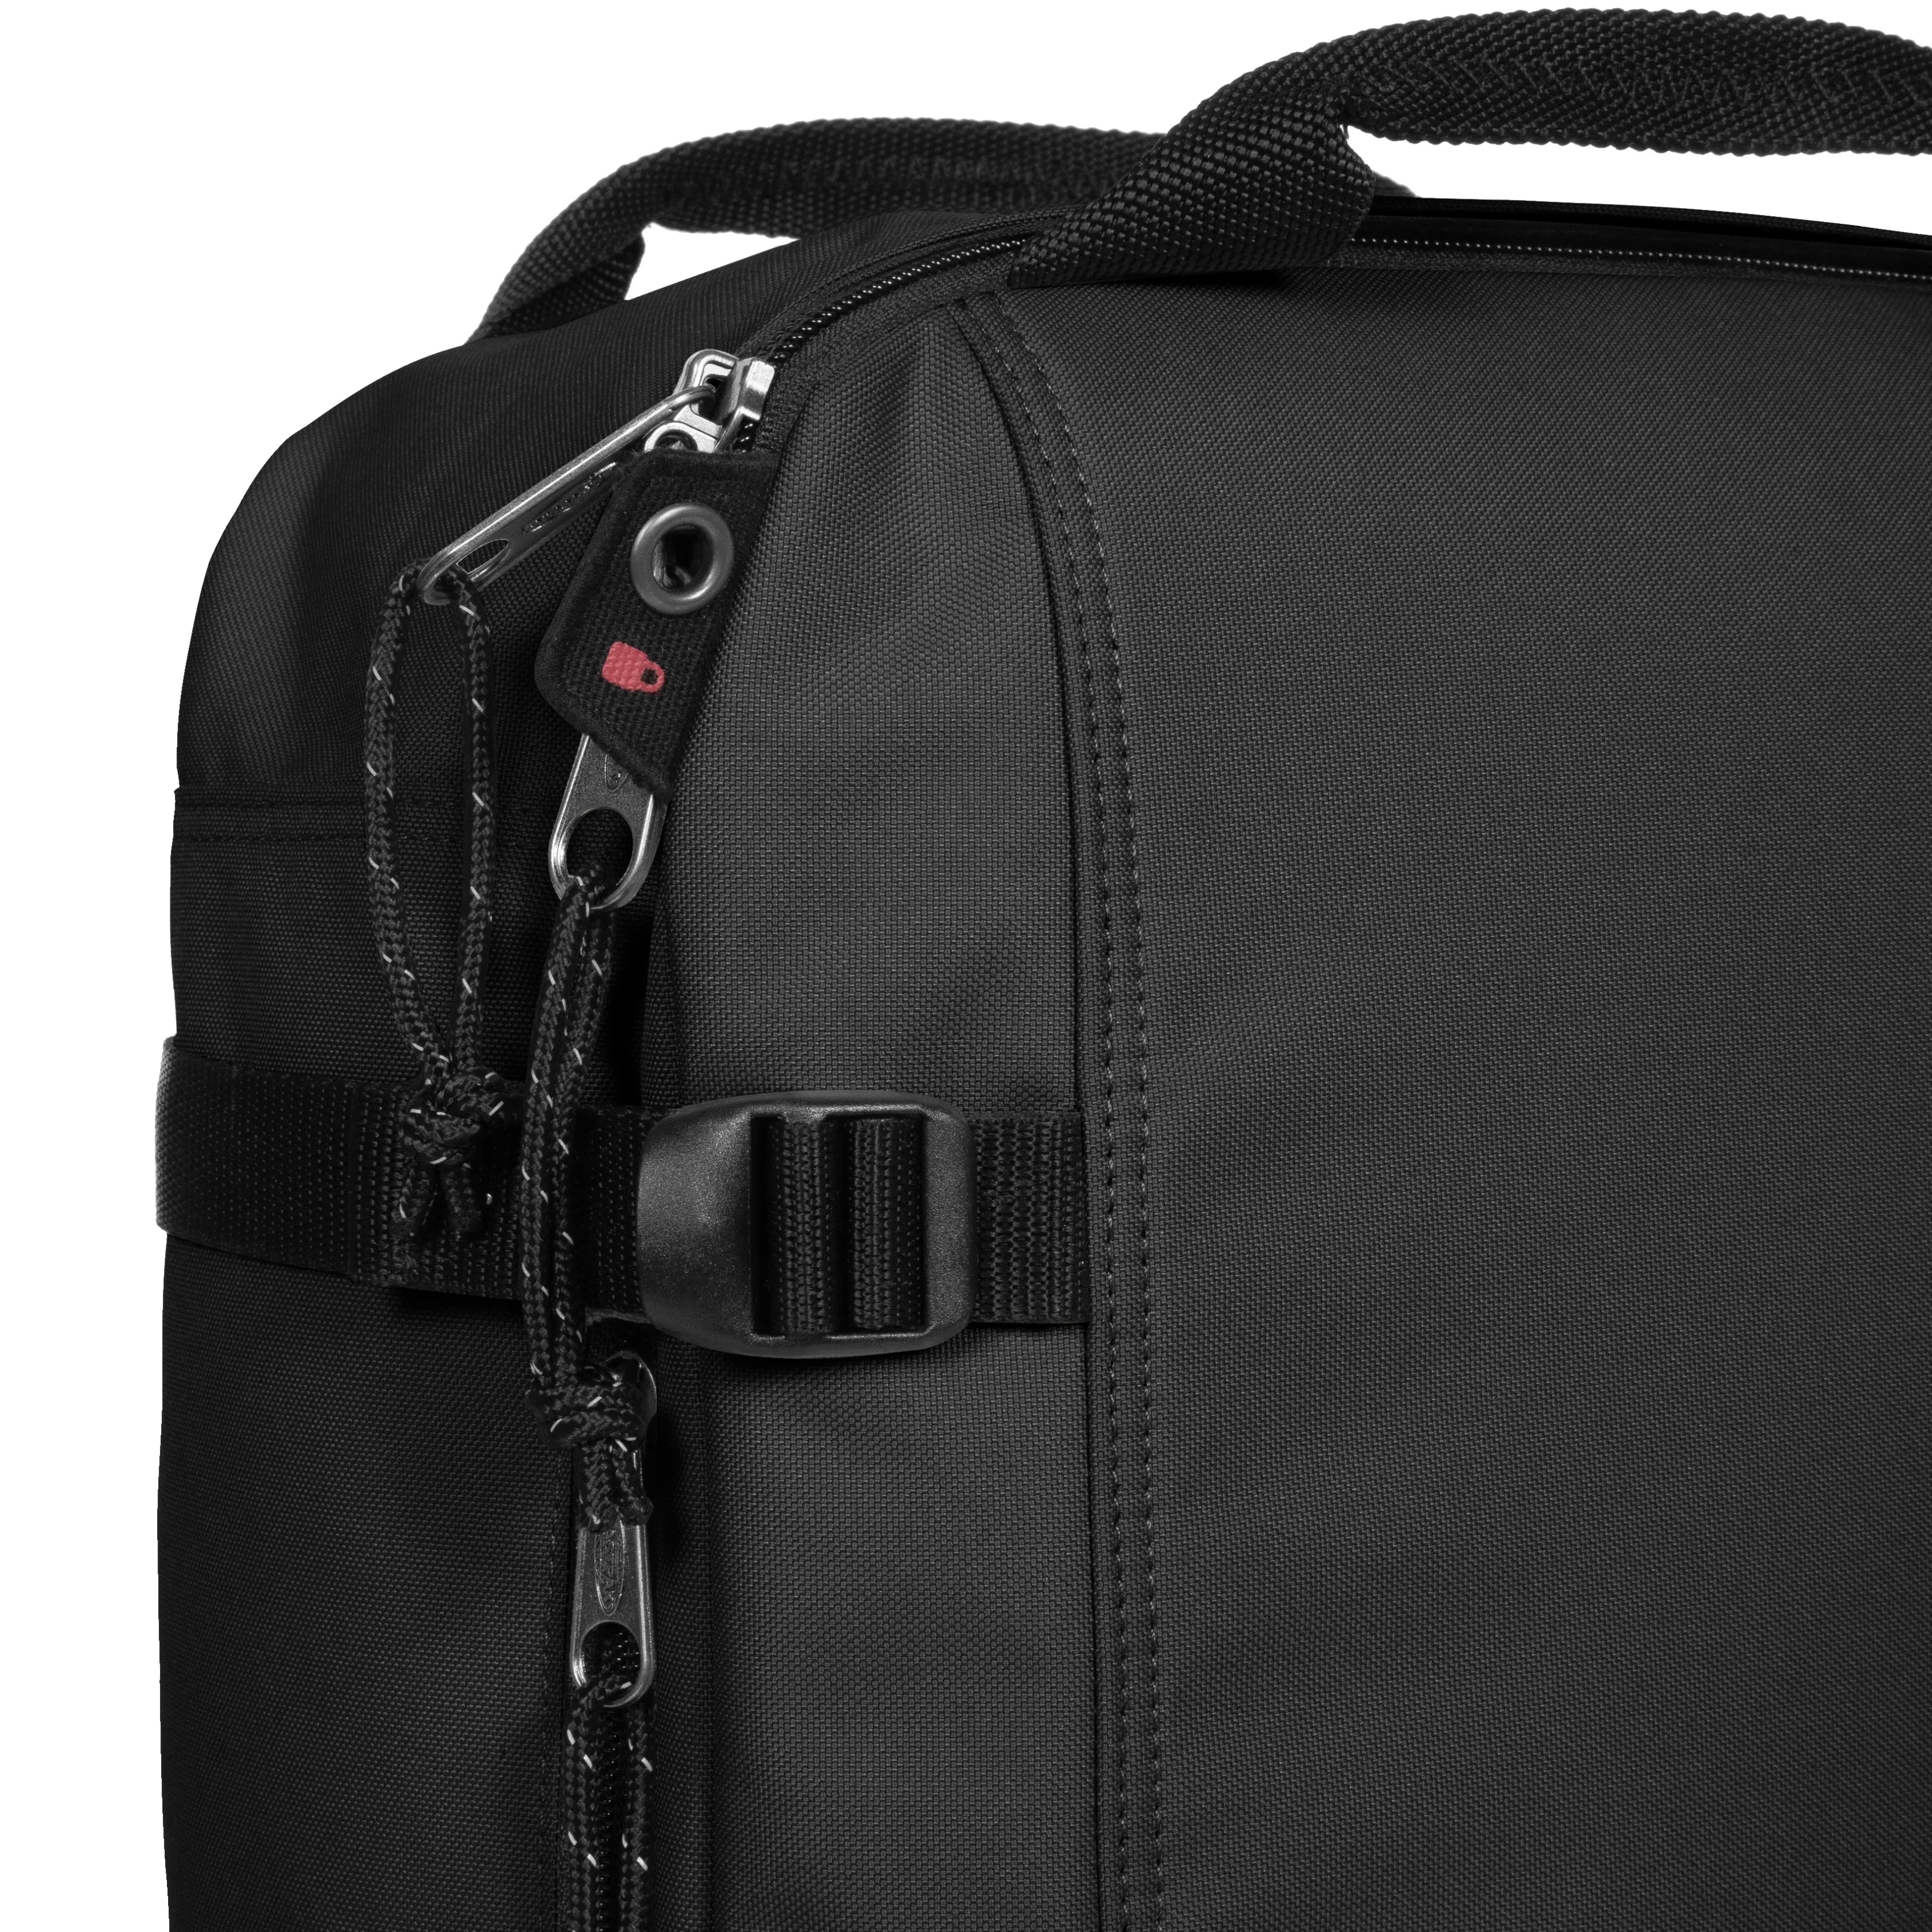 Eastpak Authentic Travel Morepack Rucksack 50 cm - Black